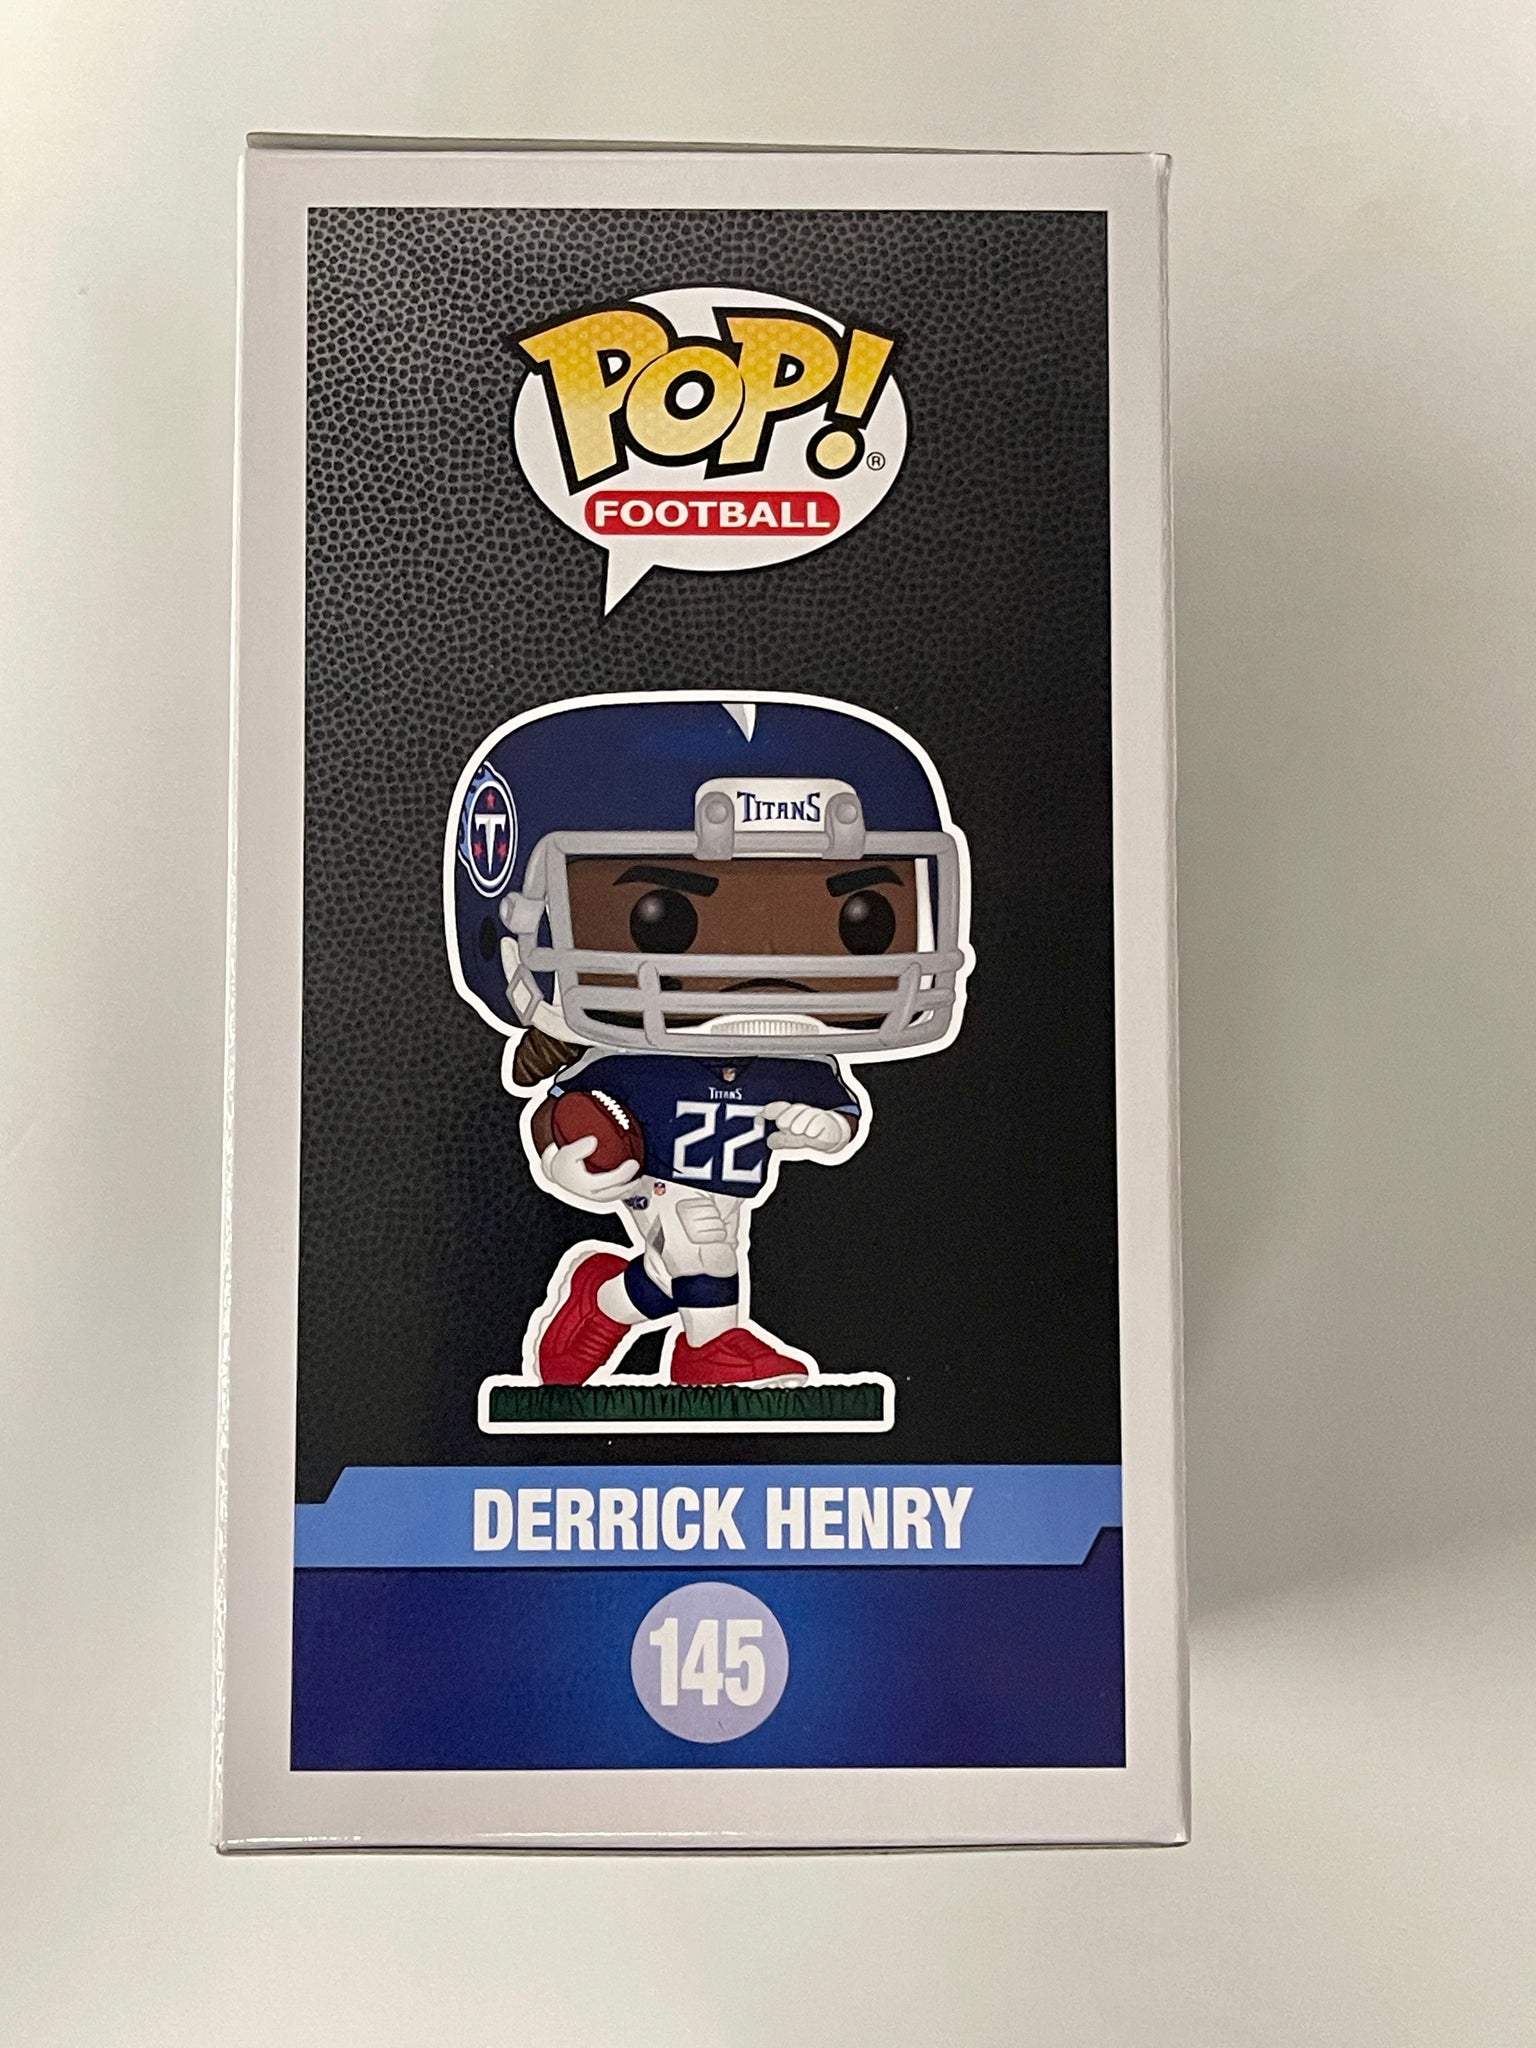 Funko Pop! NFL: Tennessee Titans - Derrick Henry